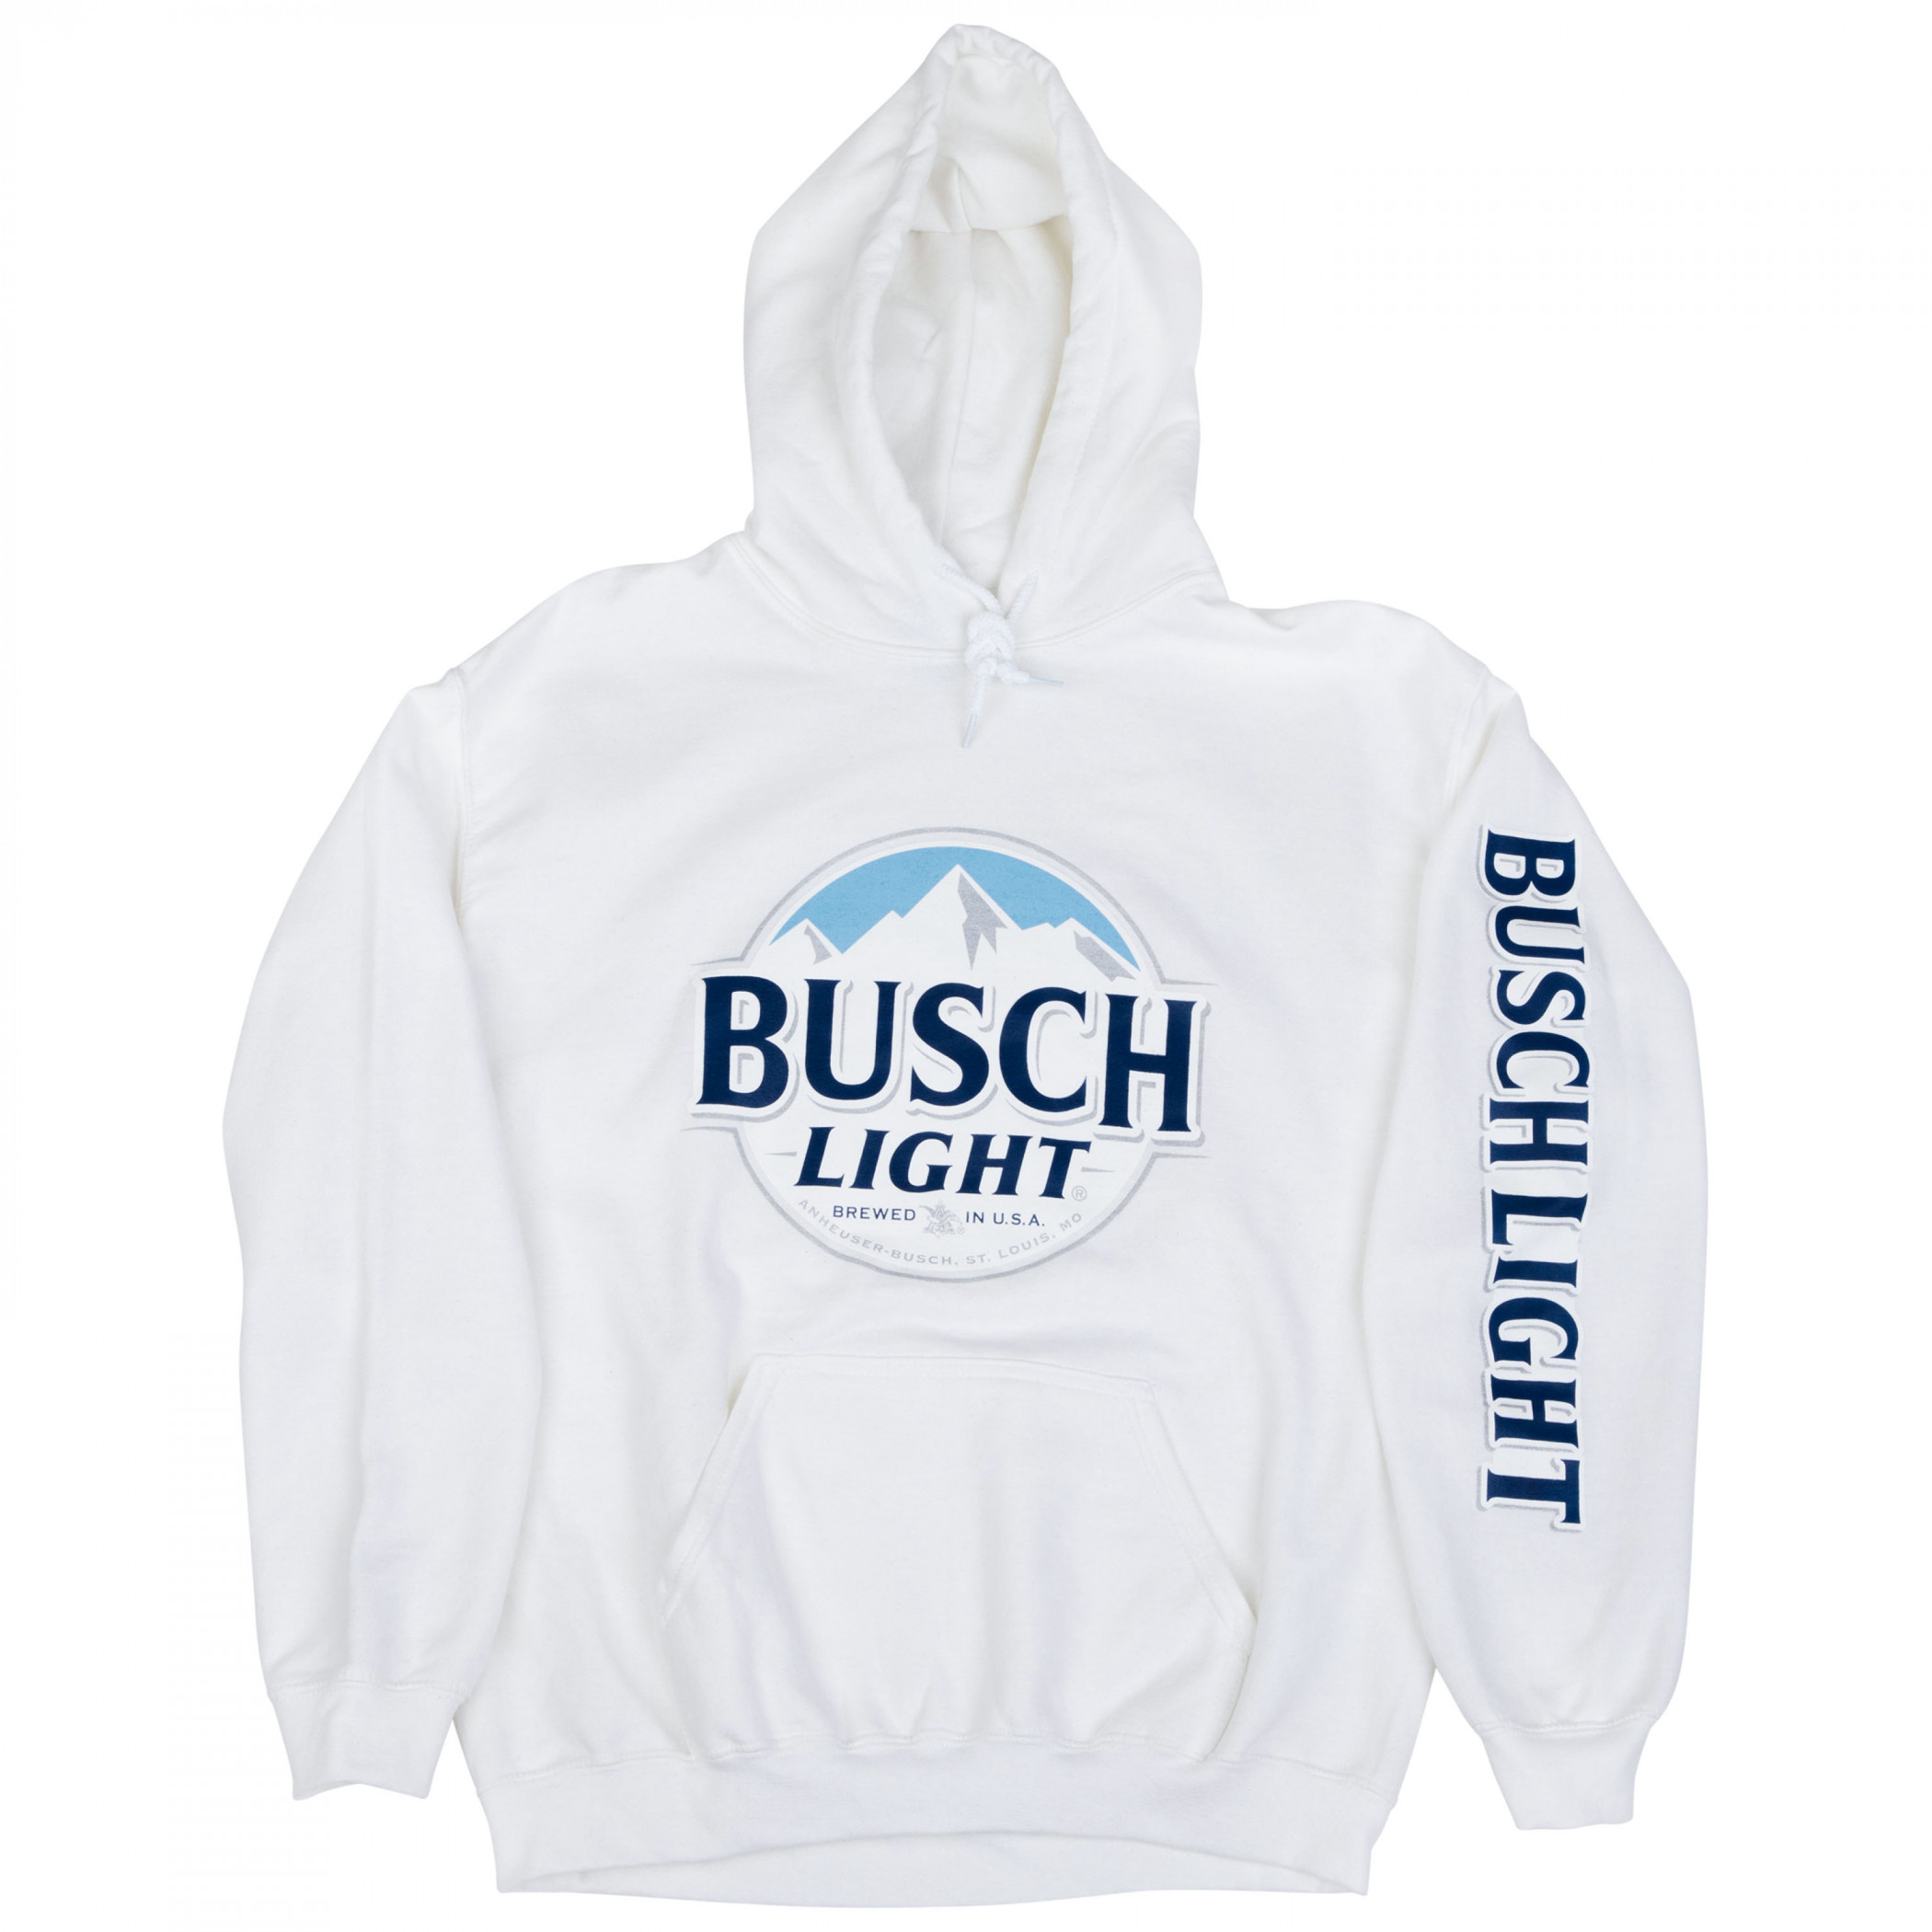 Busch Light Beer Logo White Colorway Hoodie | Brew-Shirts.com